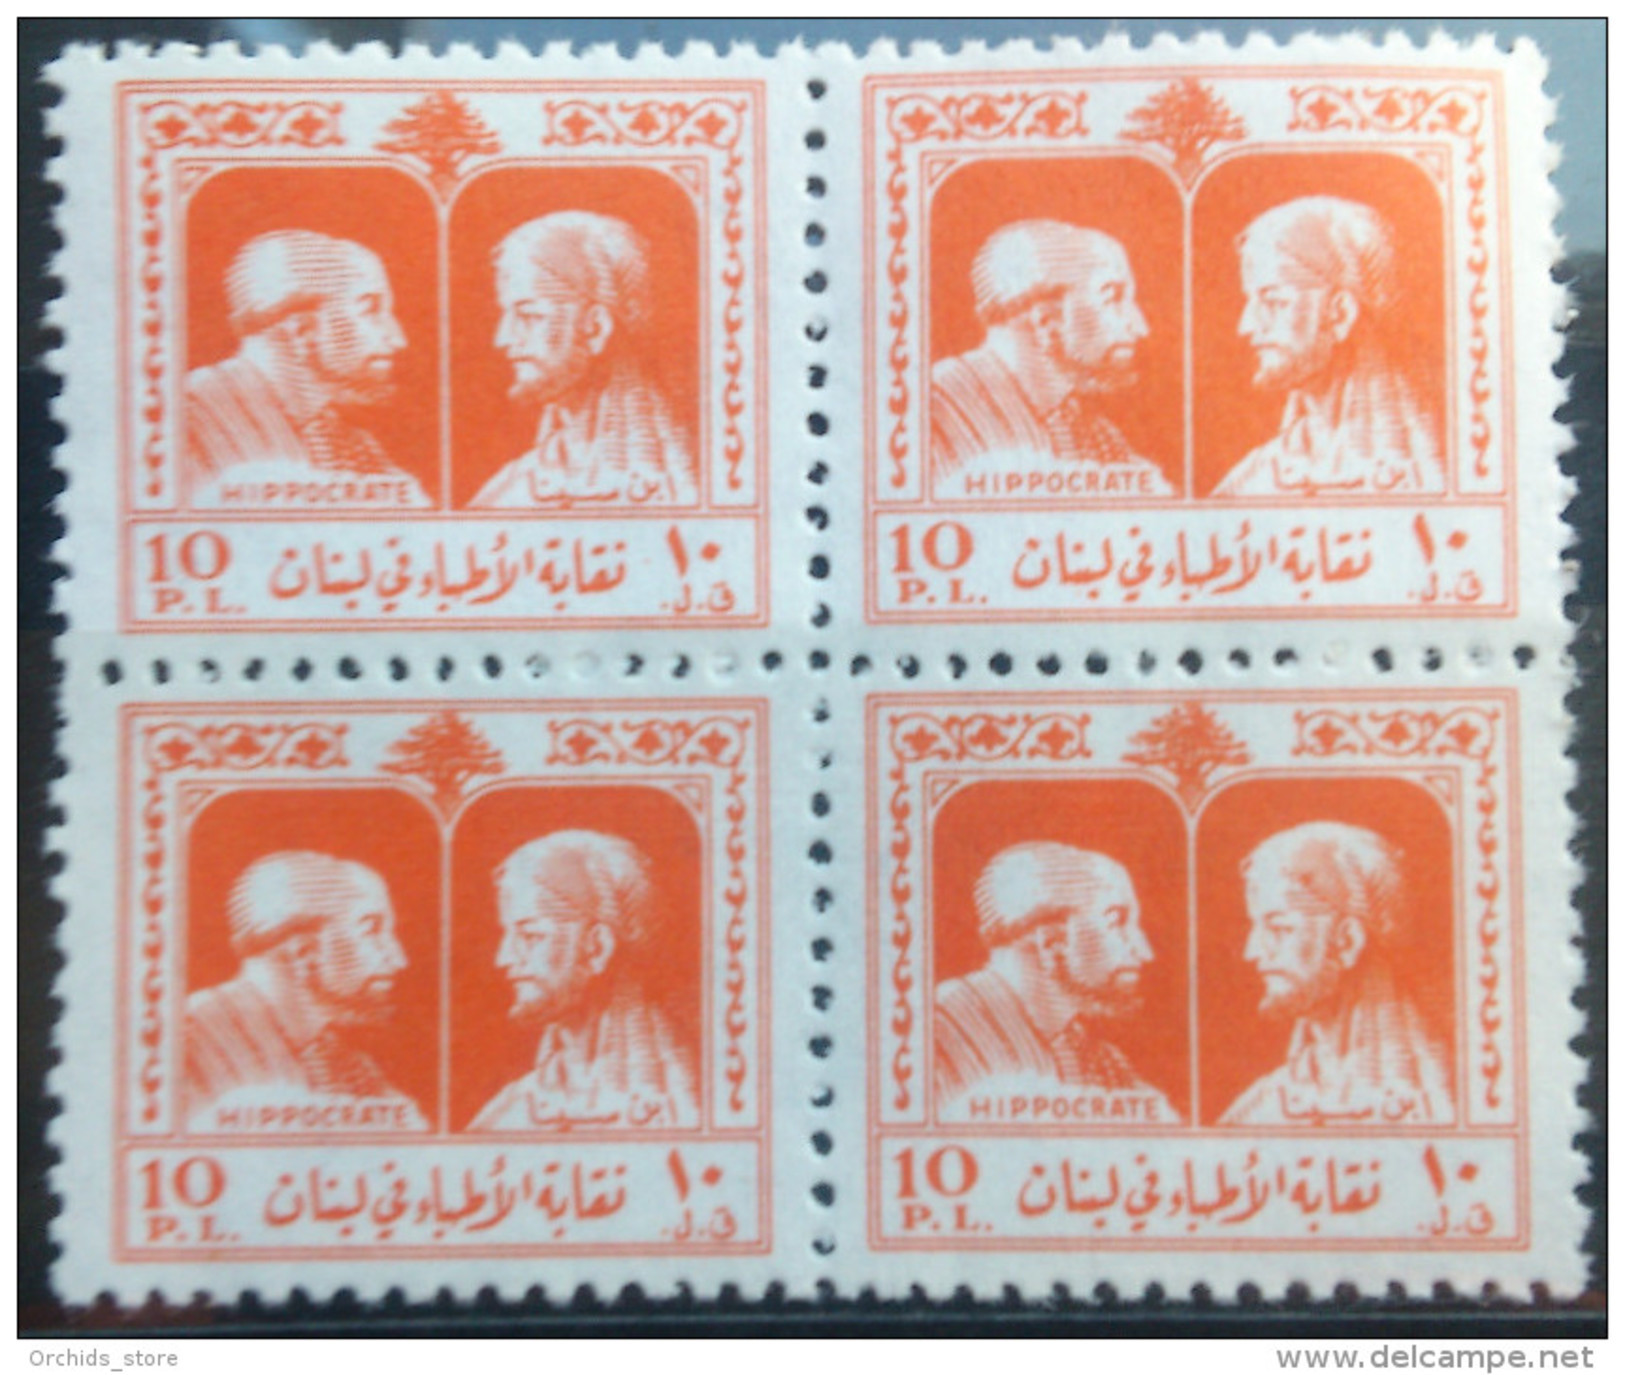 10 Lebanon 1973 Doctors Revenue Stamps, 10p Red, Blk/4 - MNH - Lebanon